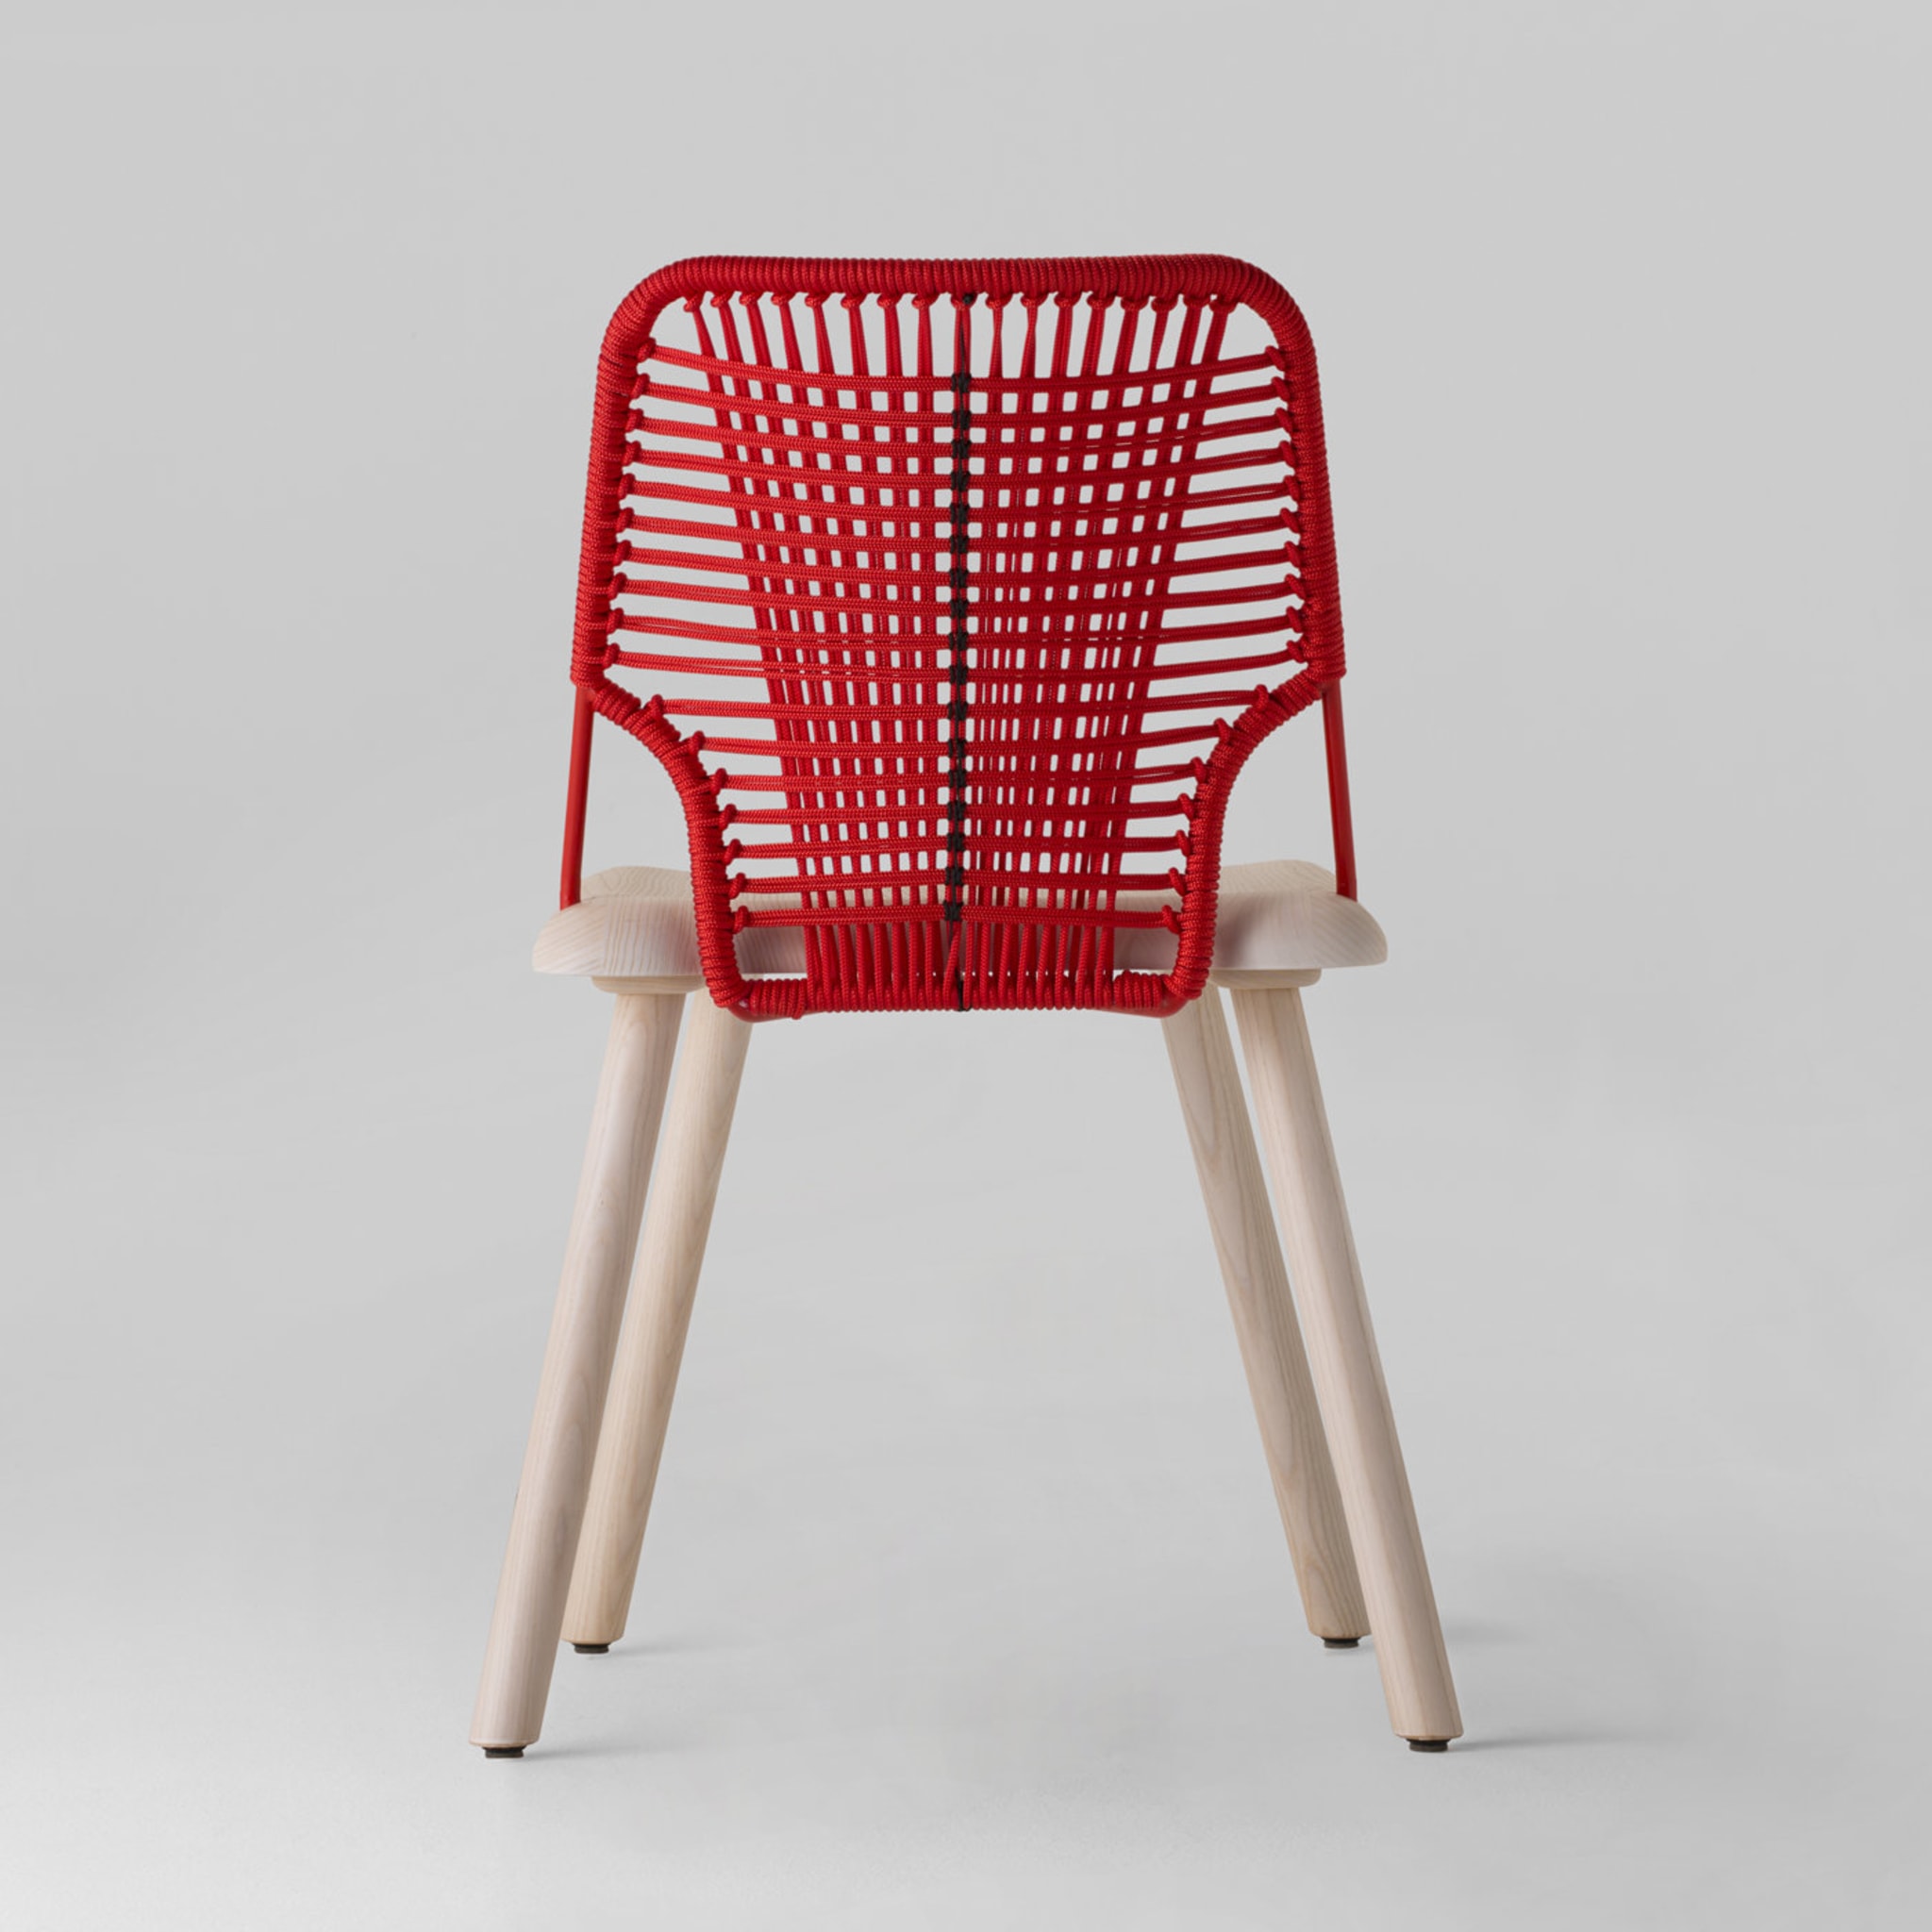 Jackie Red Chair By Emilio Nanni - Alternative view 3